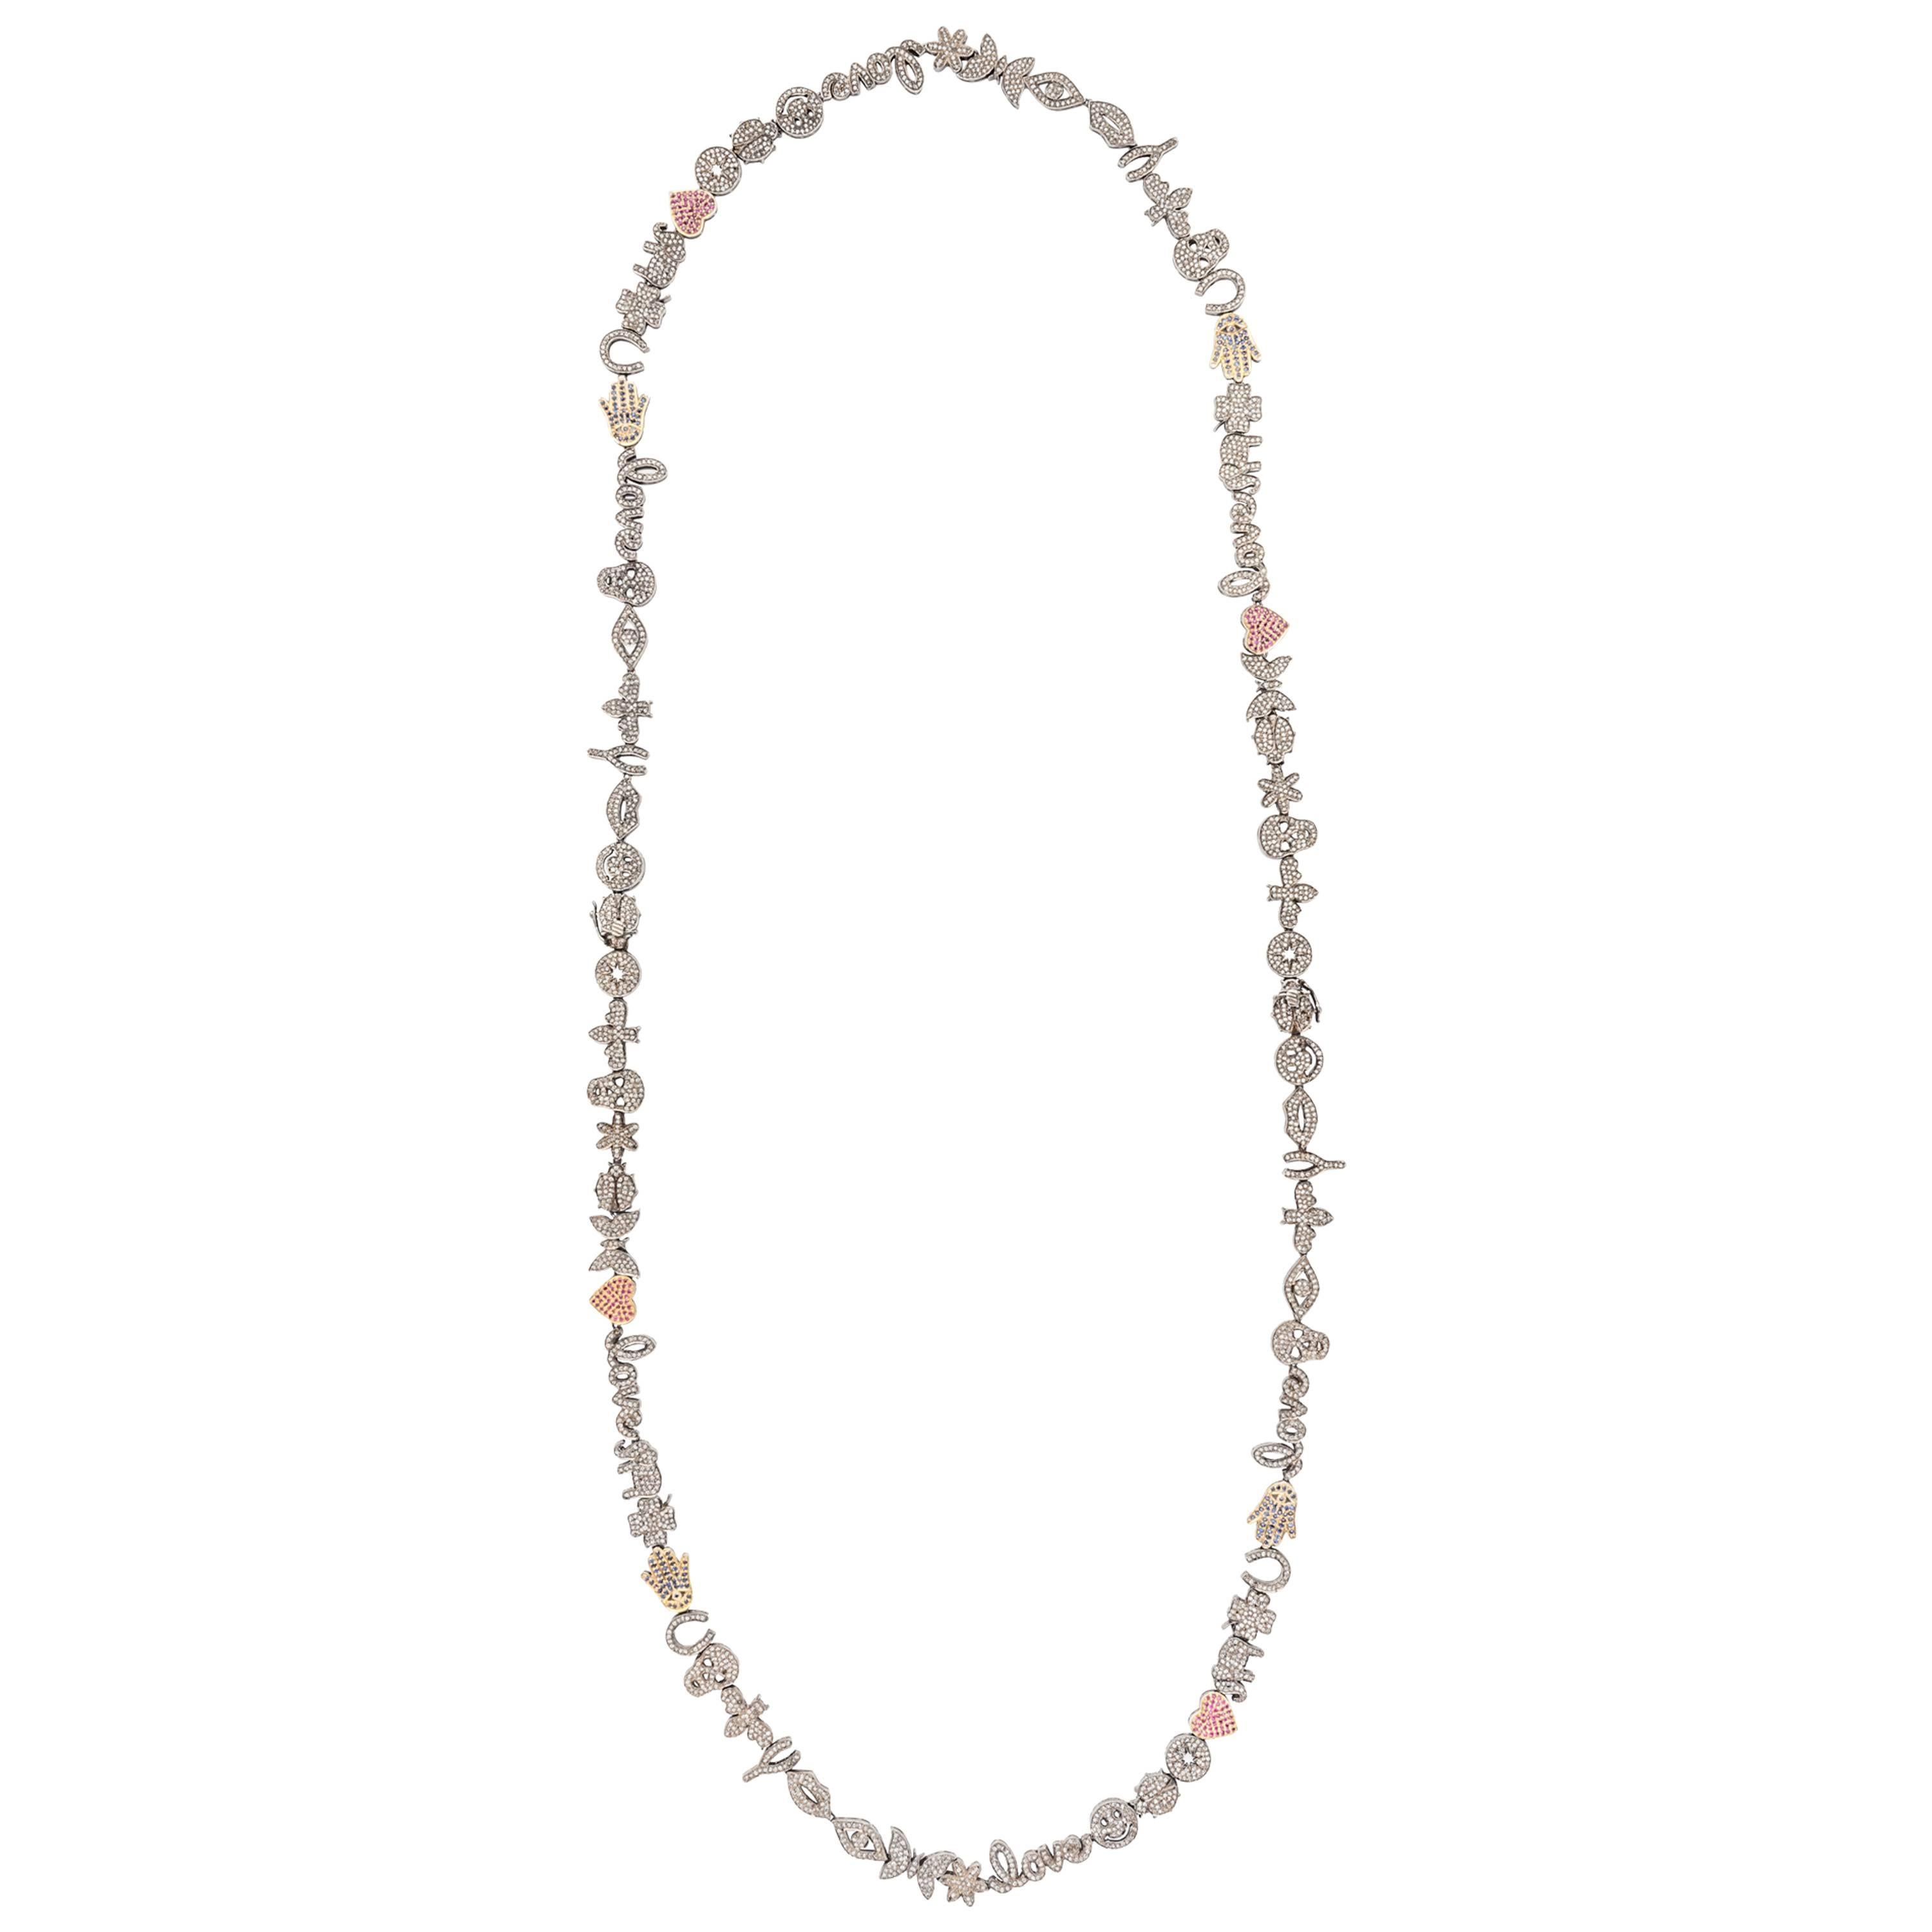 Clarissa Bronfman Diamond 'Emoji' Necklace 